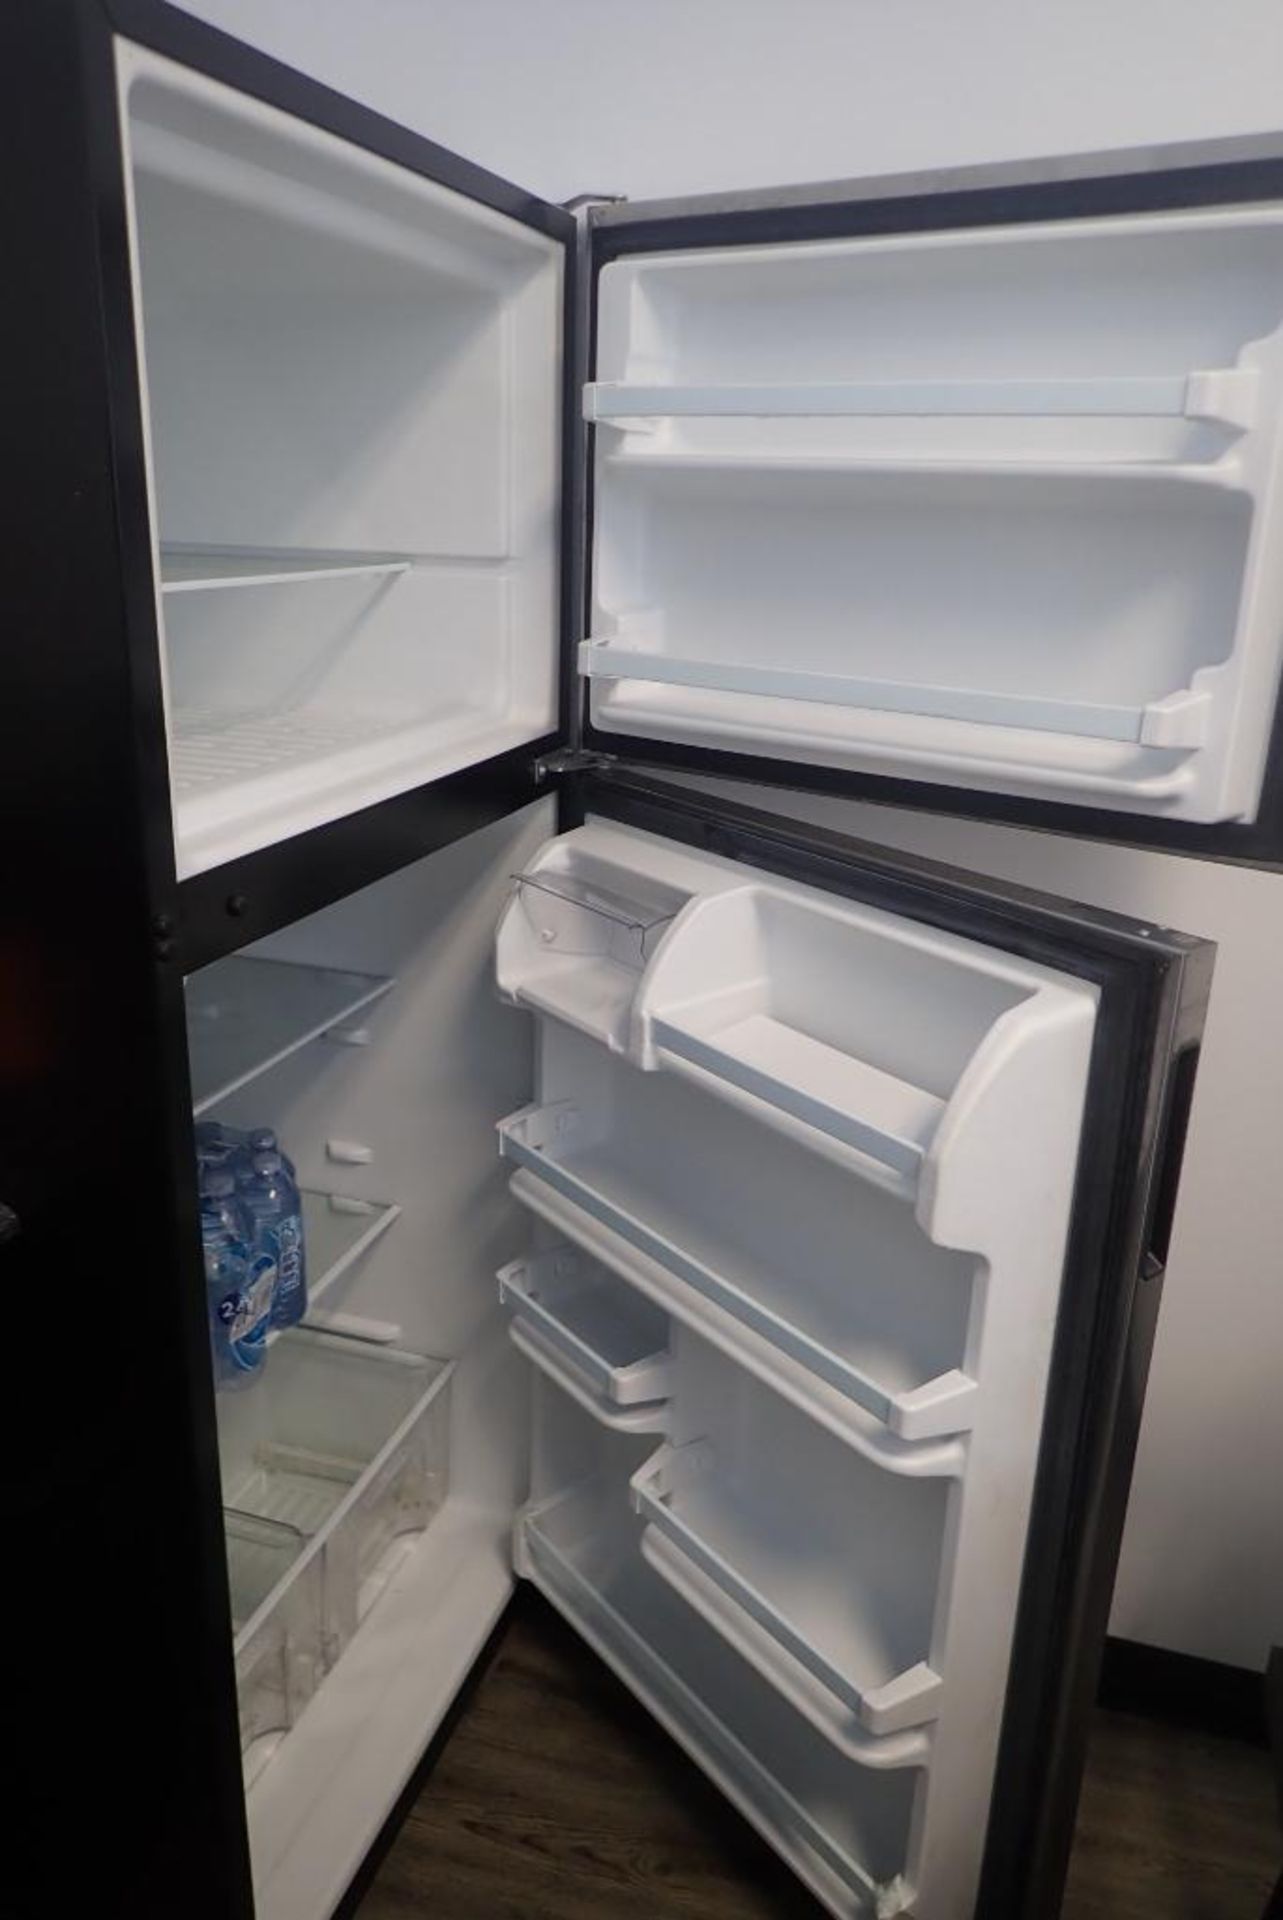 Amana Stainless Steel Top Freezer/Bottom Refrigerator. - Image 2 of 2